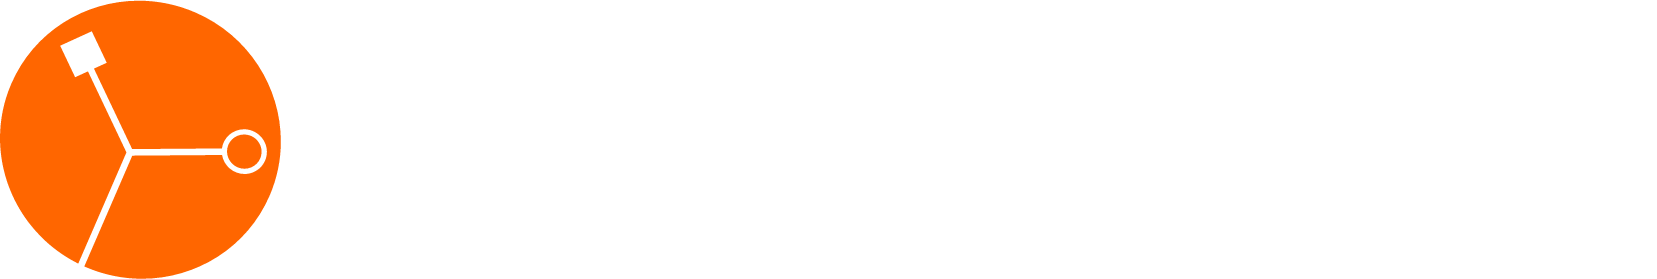 Exscientia logo large for dark backgrounds (transparent PNG)